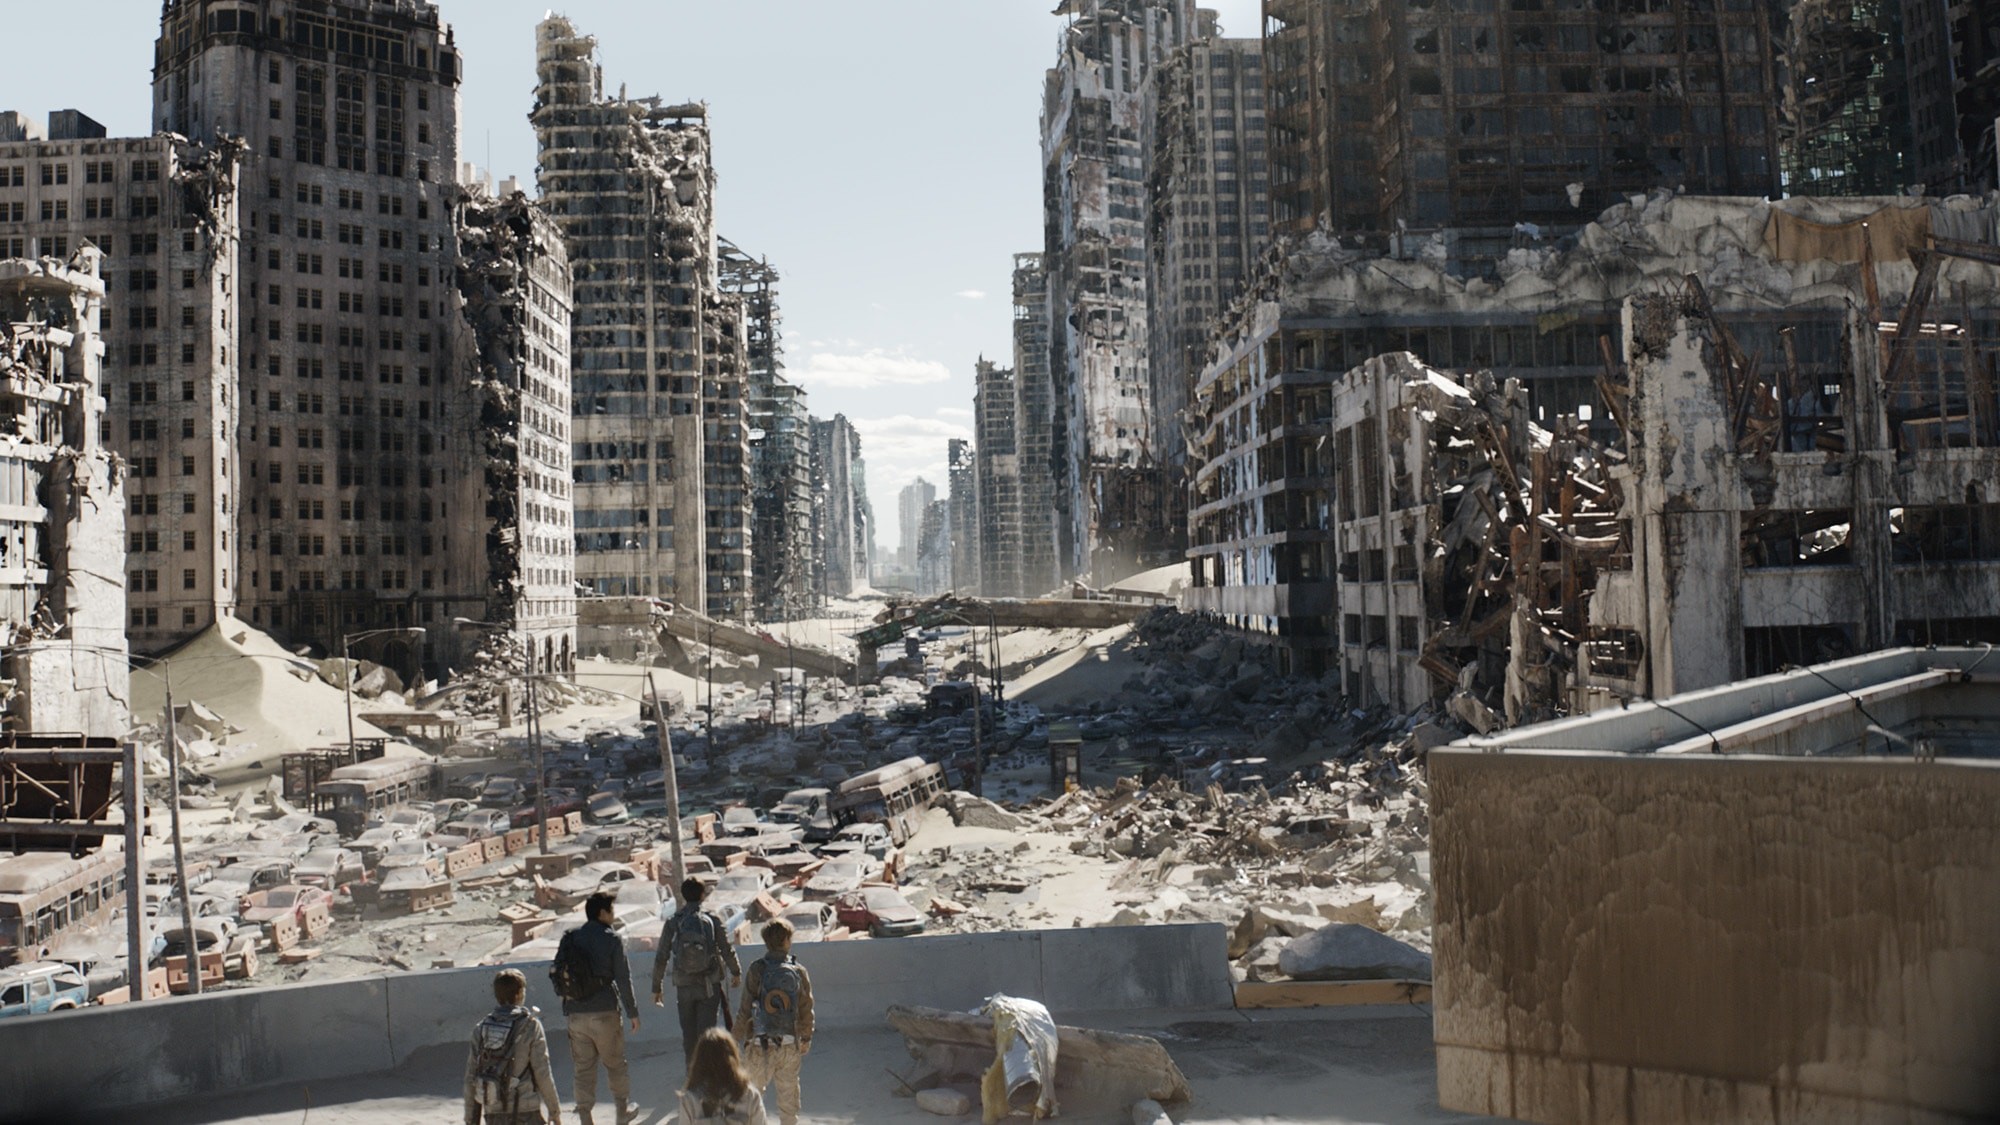 Destroyed City Background